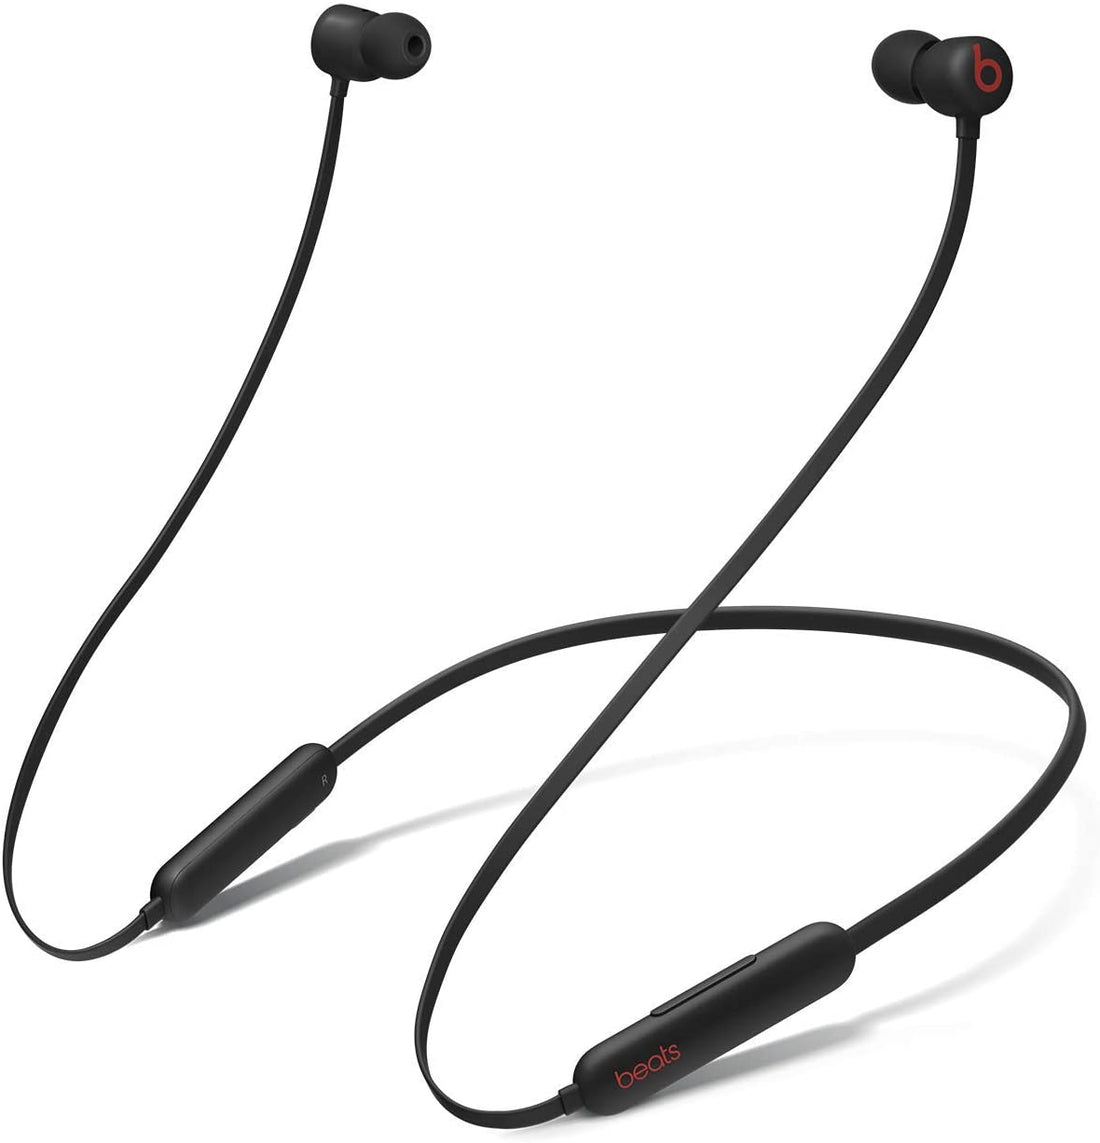 Beats Flex Wireless Earphones, Magnetic Earbuds w/Built-in Microphone - Black (New)